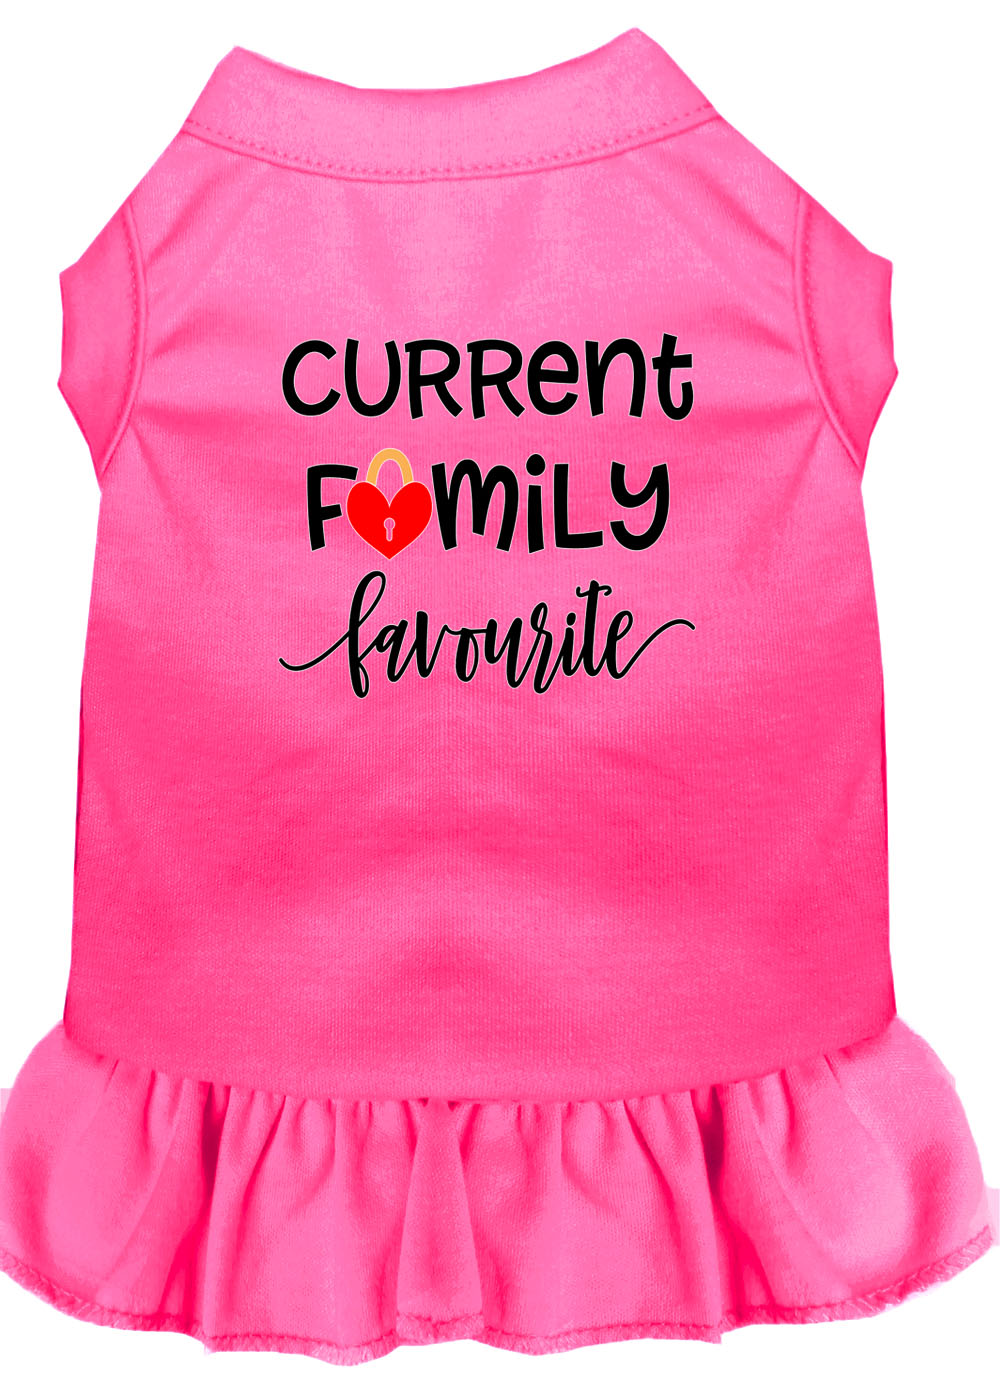 Family Favorite Screen Print Dog Dress Bright Pink Med